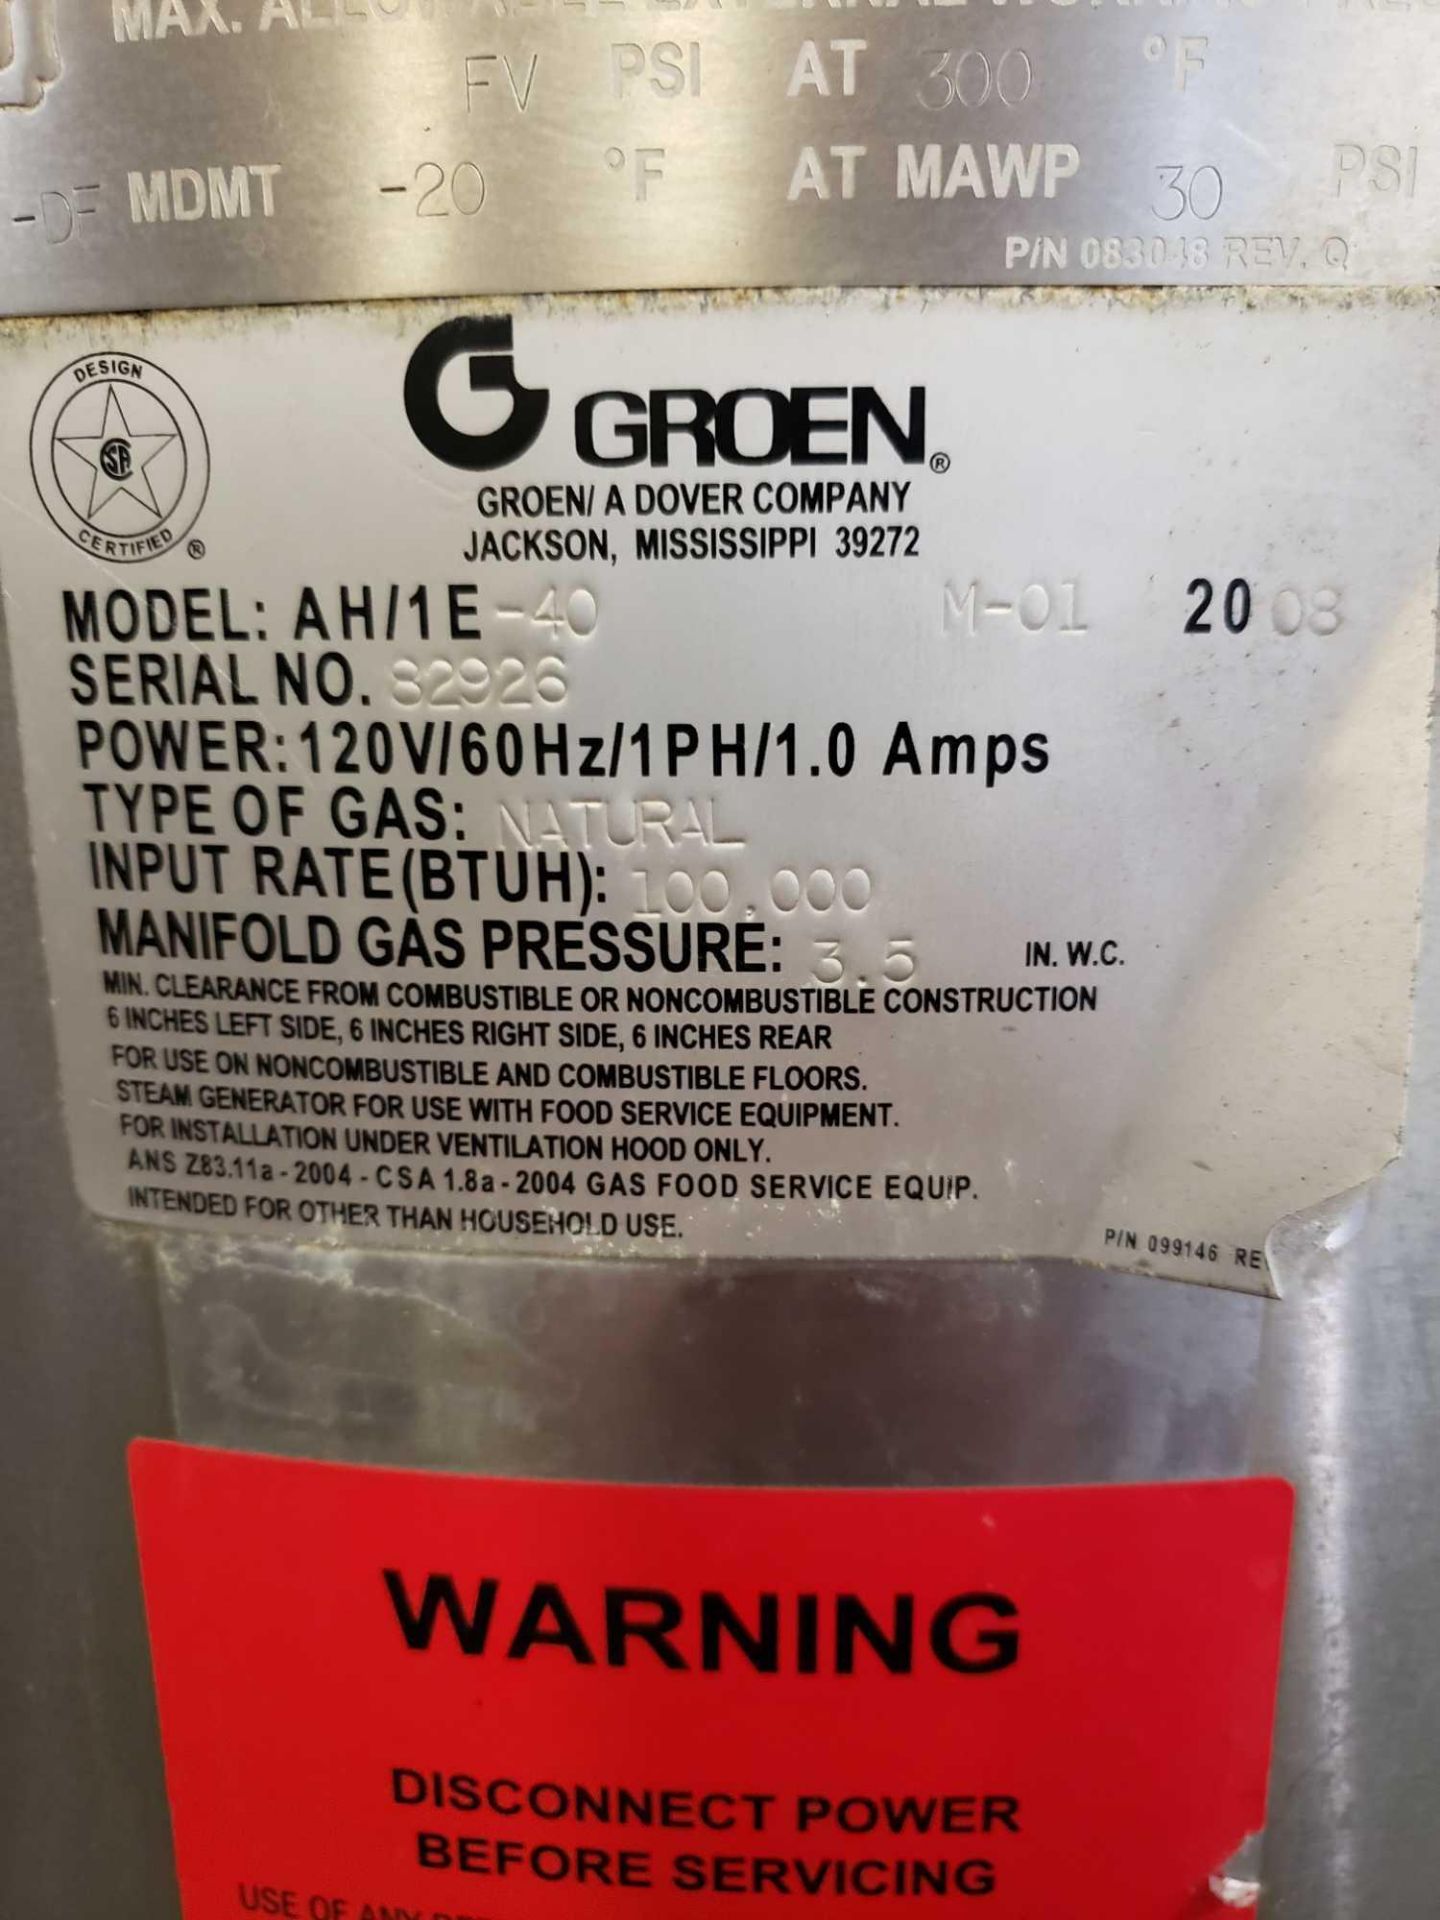 Groen model AH/1E-40, 40 gallon nat gas steam jacketed kettle. 100k btu. Mfg date 2008. - Image 4 of 10